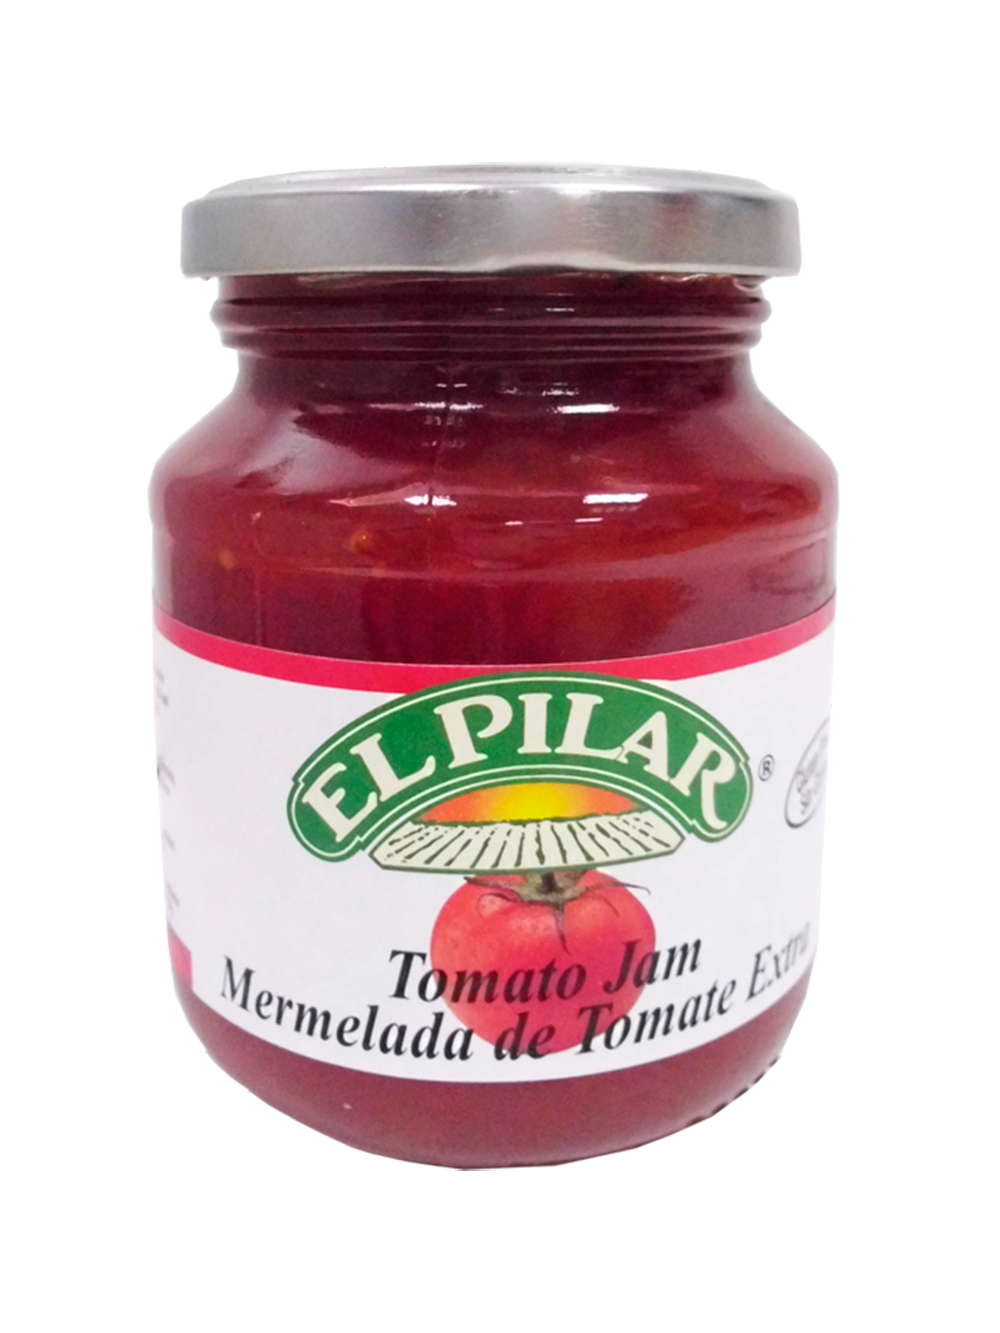 Tomato Jam / Mermelada de Tomate